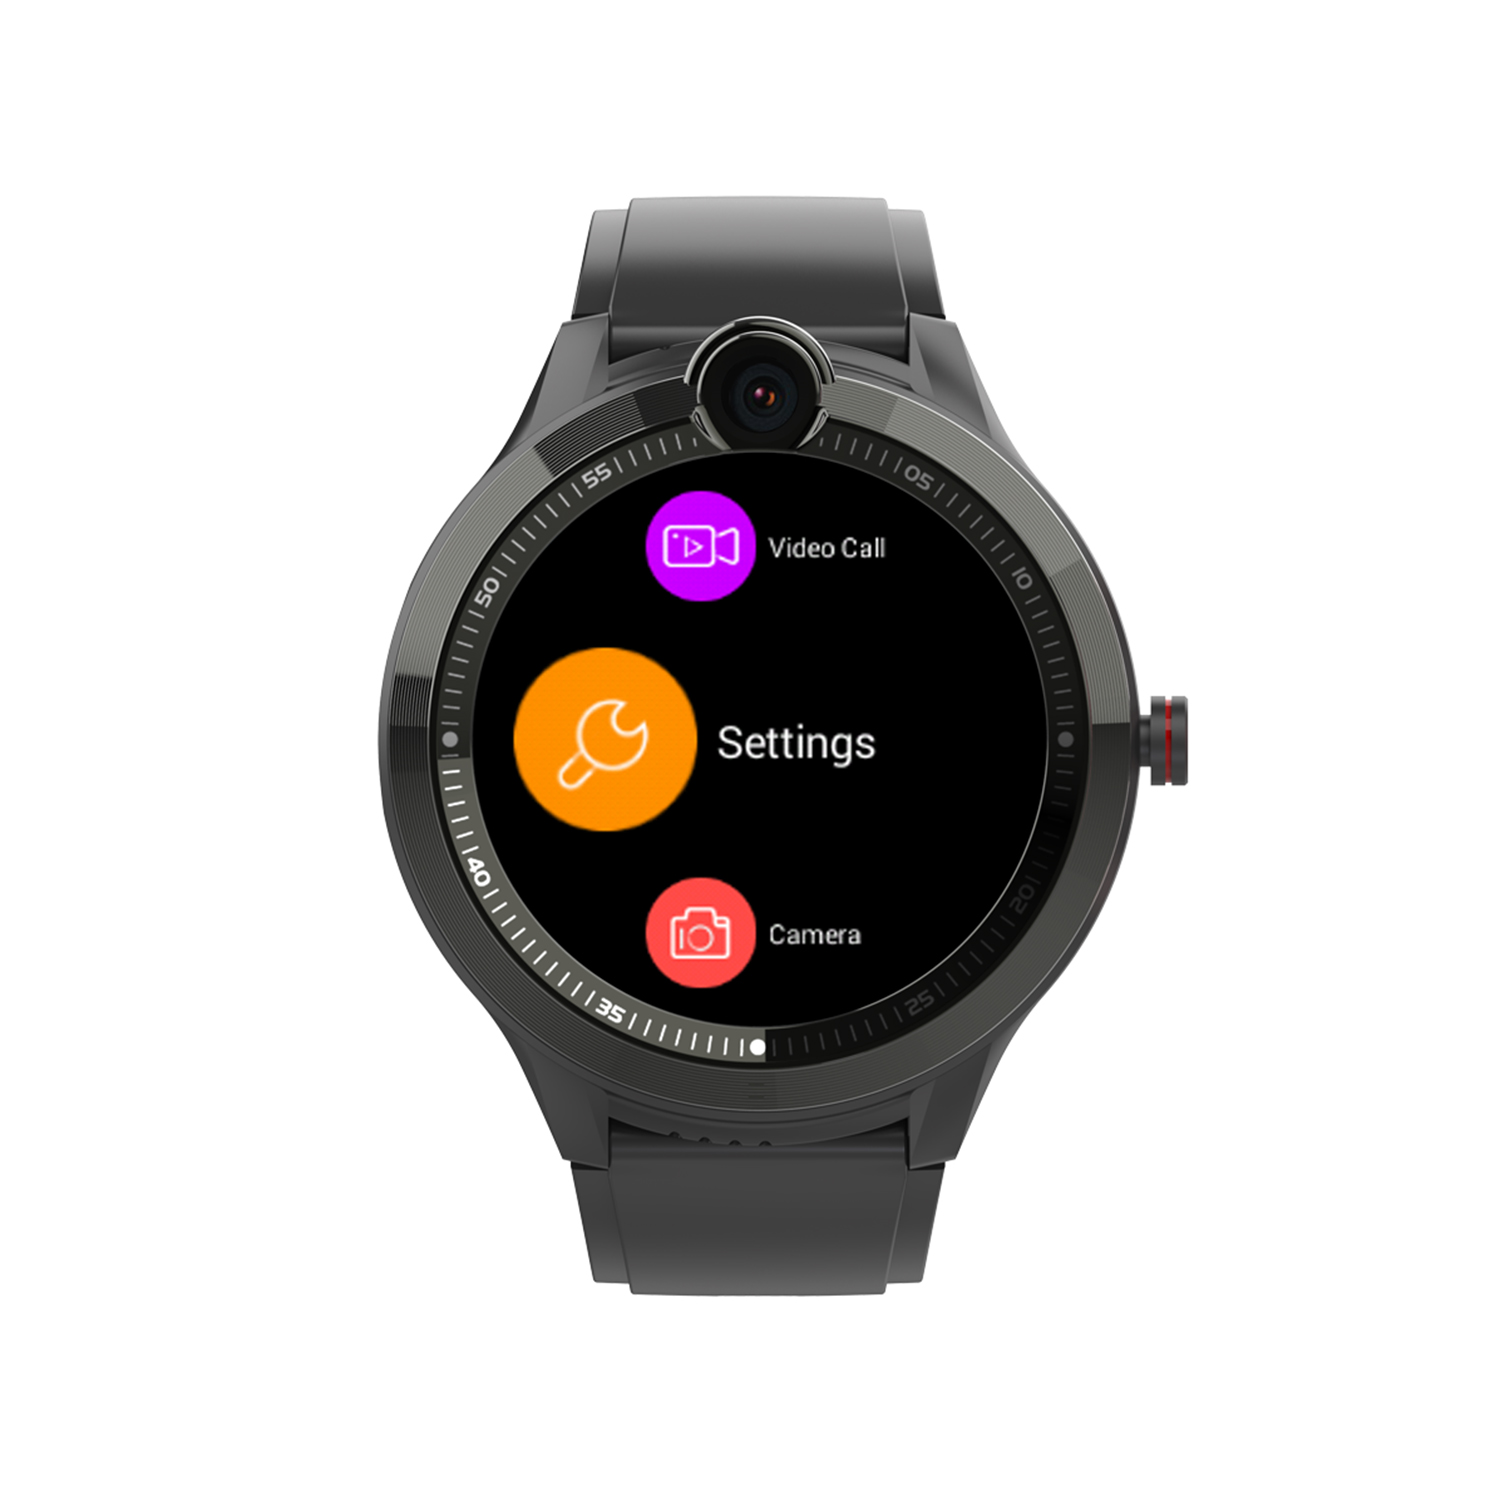 Newest 4G IP67 waterproof OEM child GPS Smart Watch 